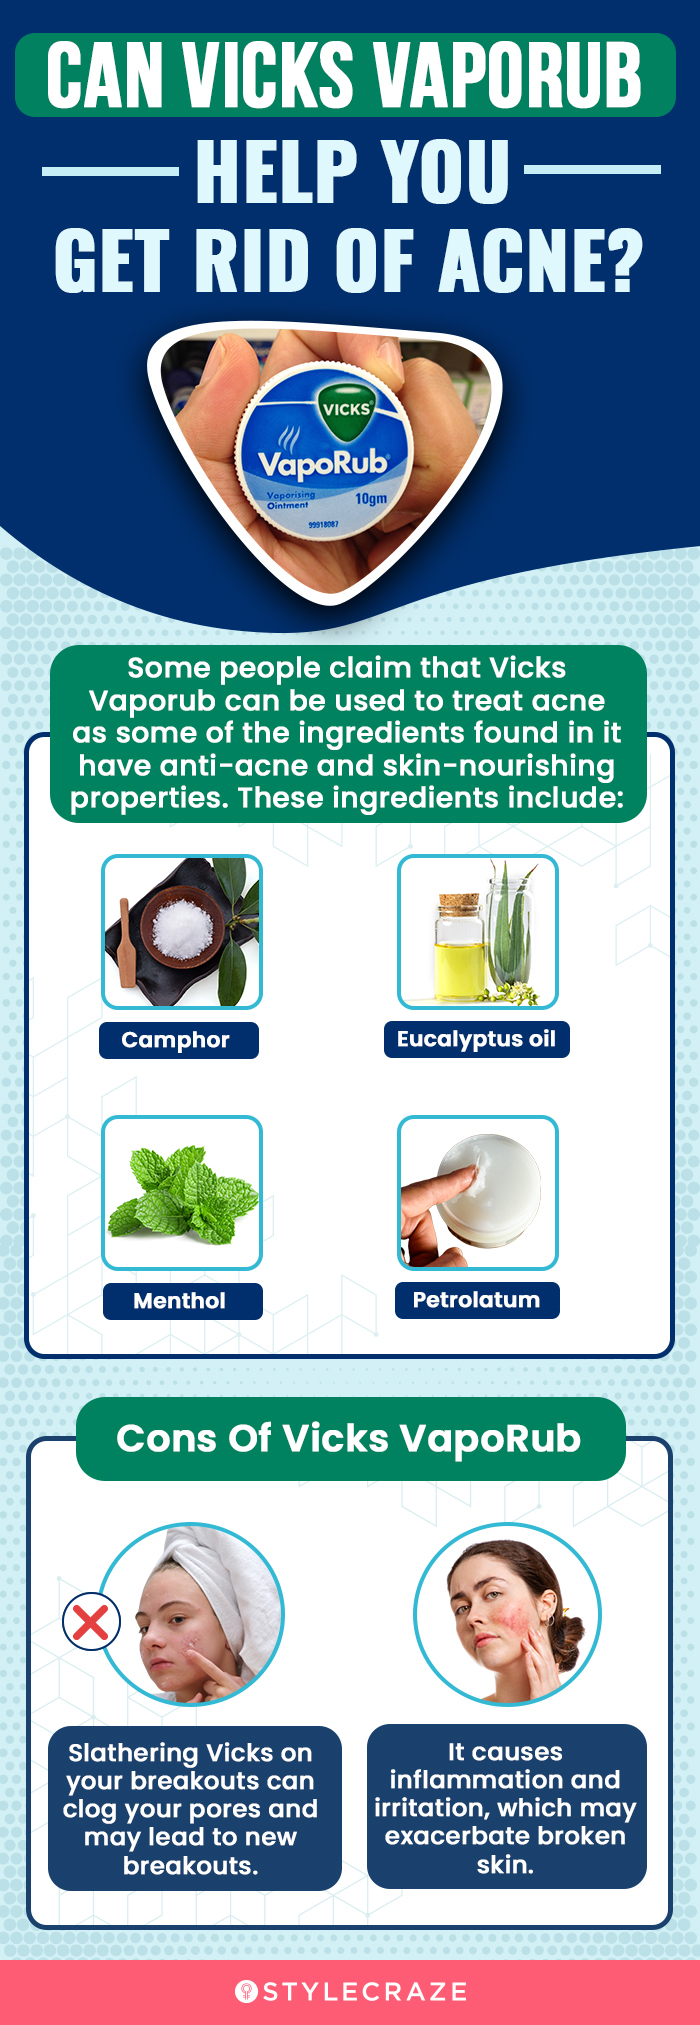 can vicks vaporub help you get rid of acne? (infographic)